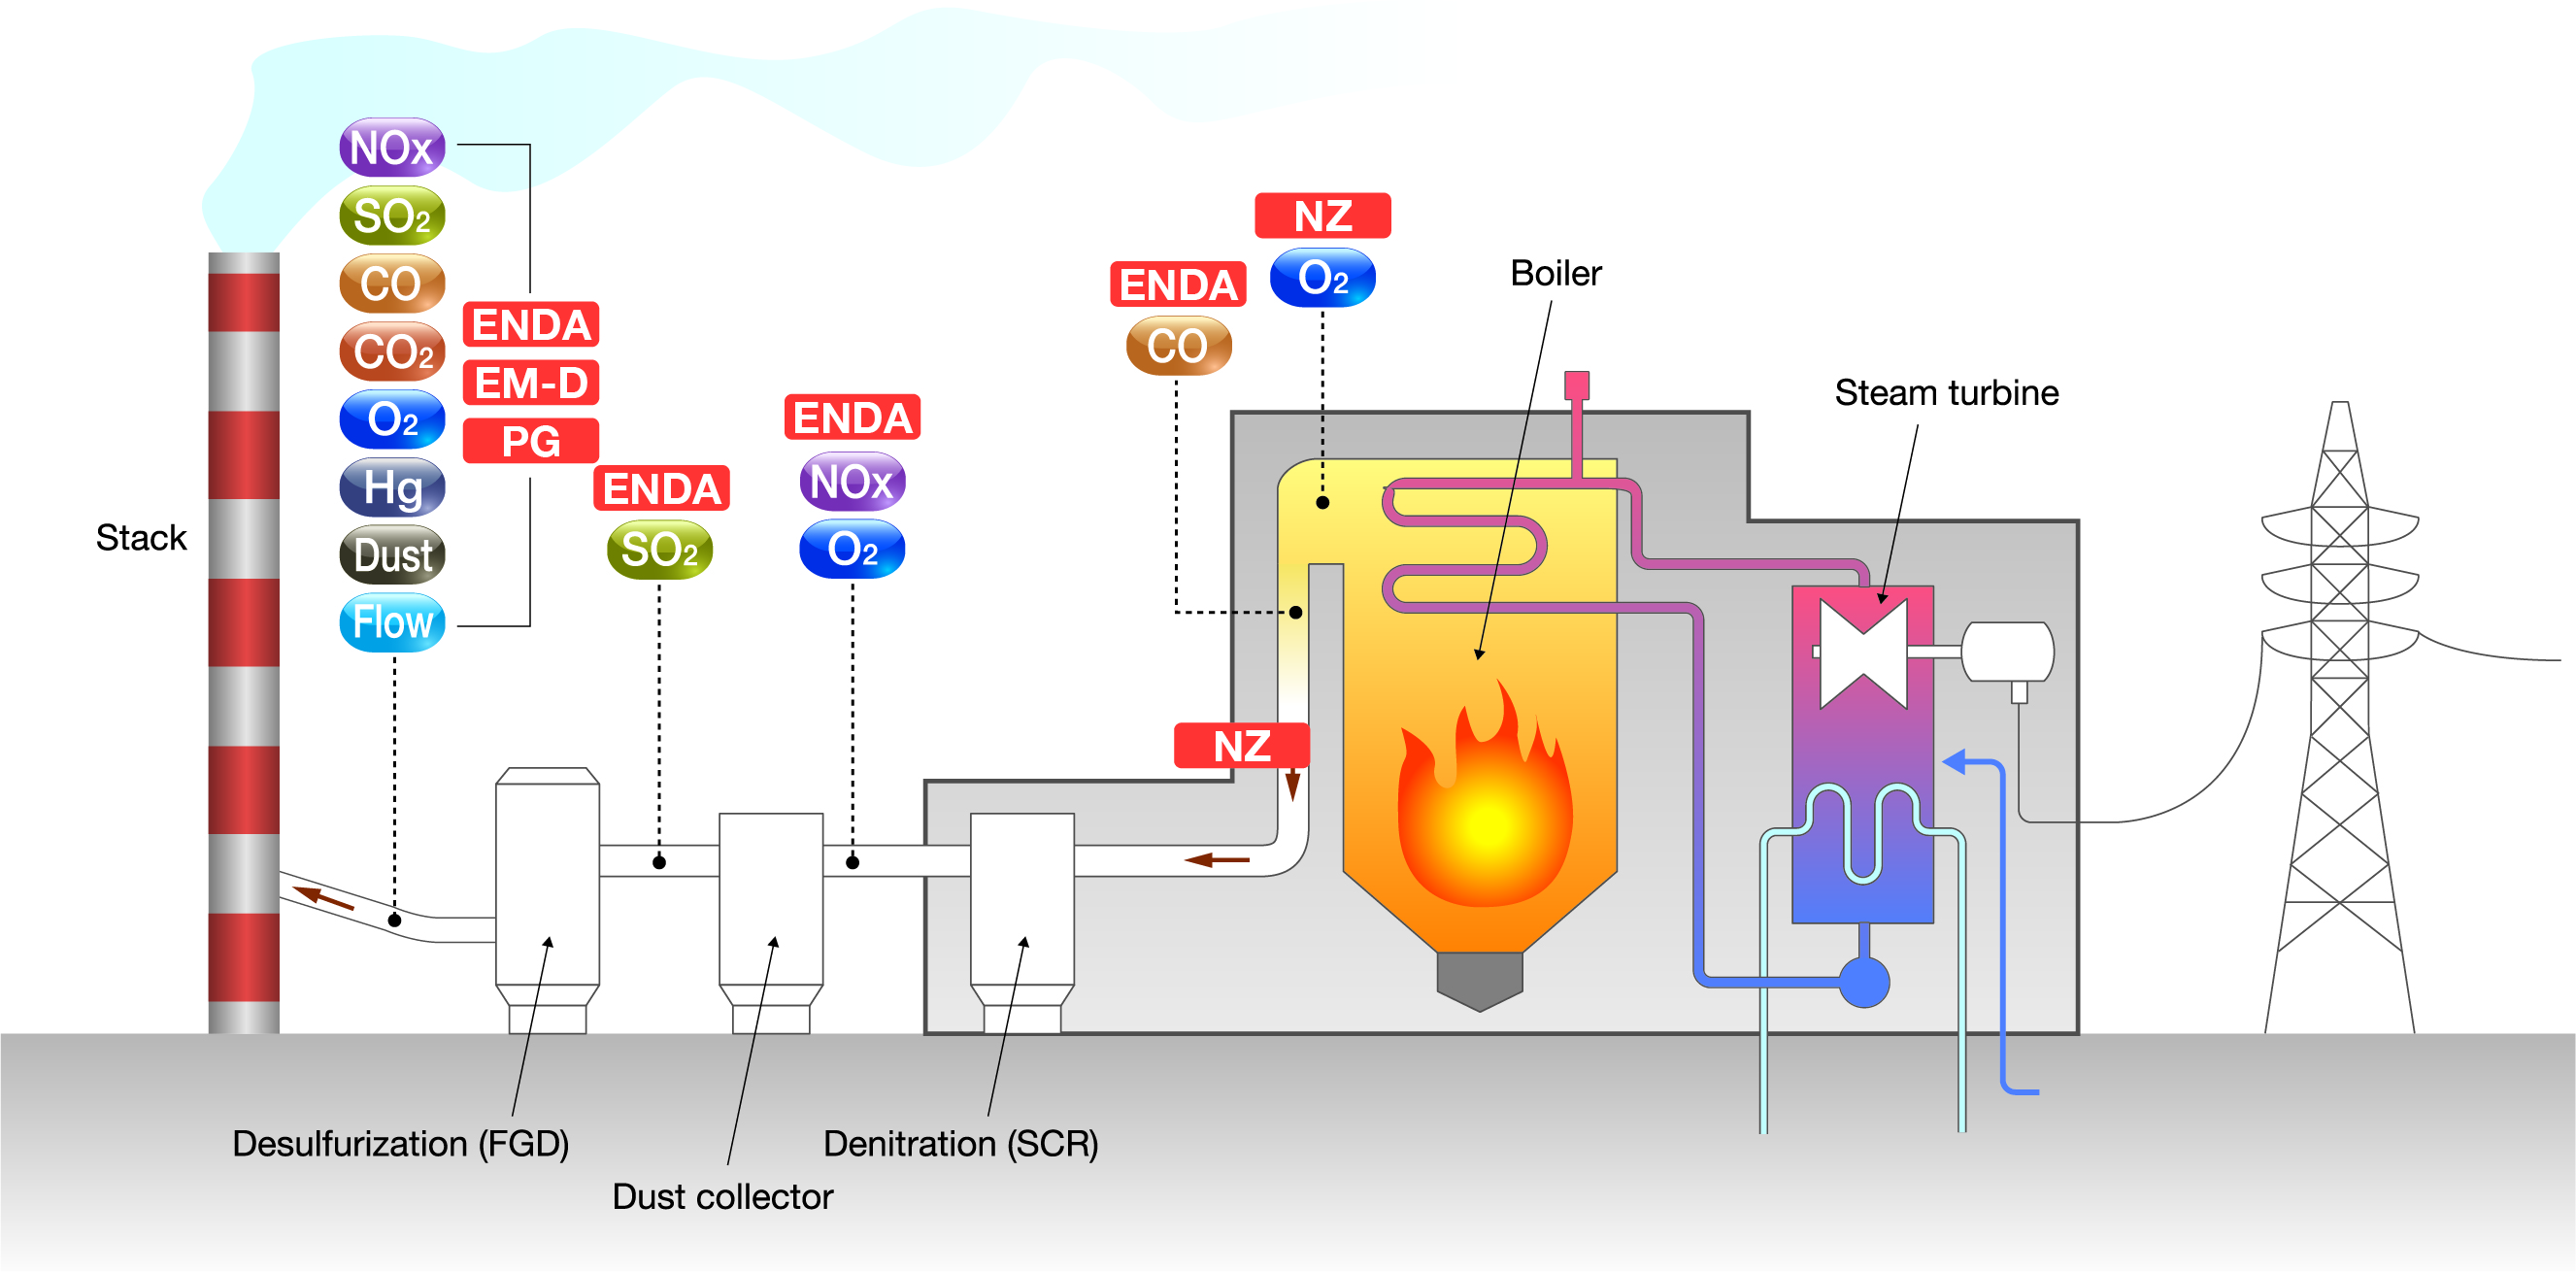 Co2 emission monitoring System